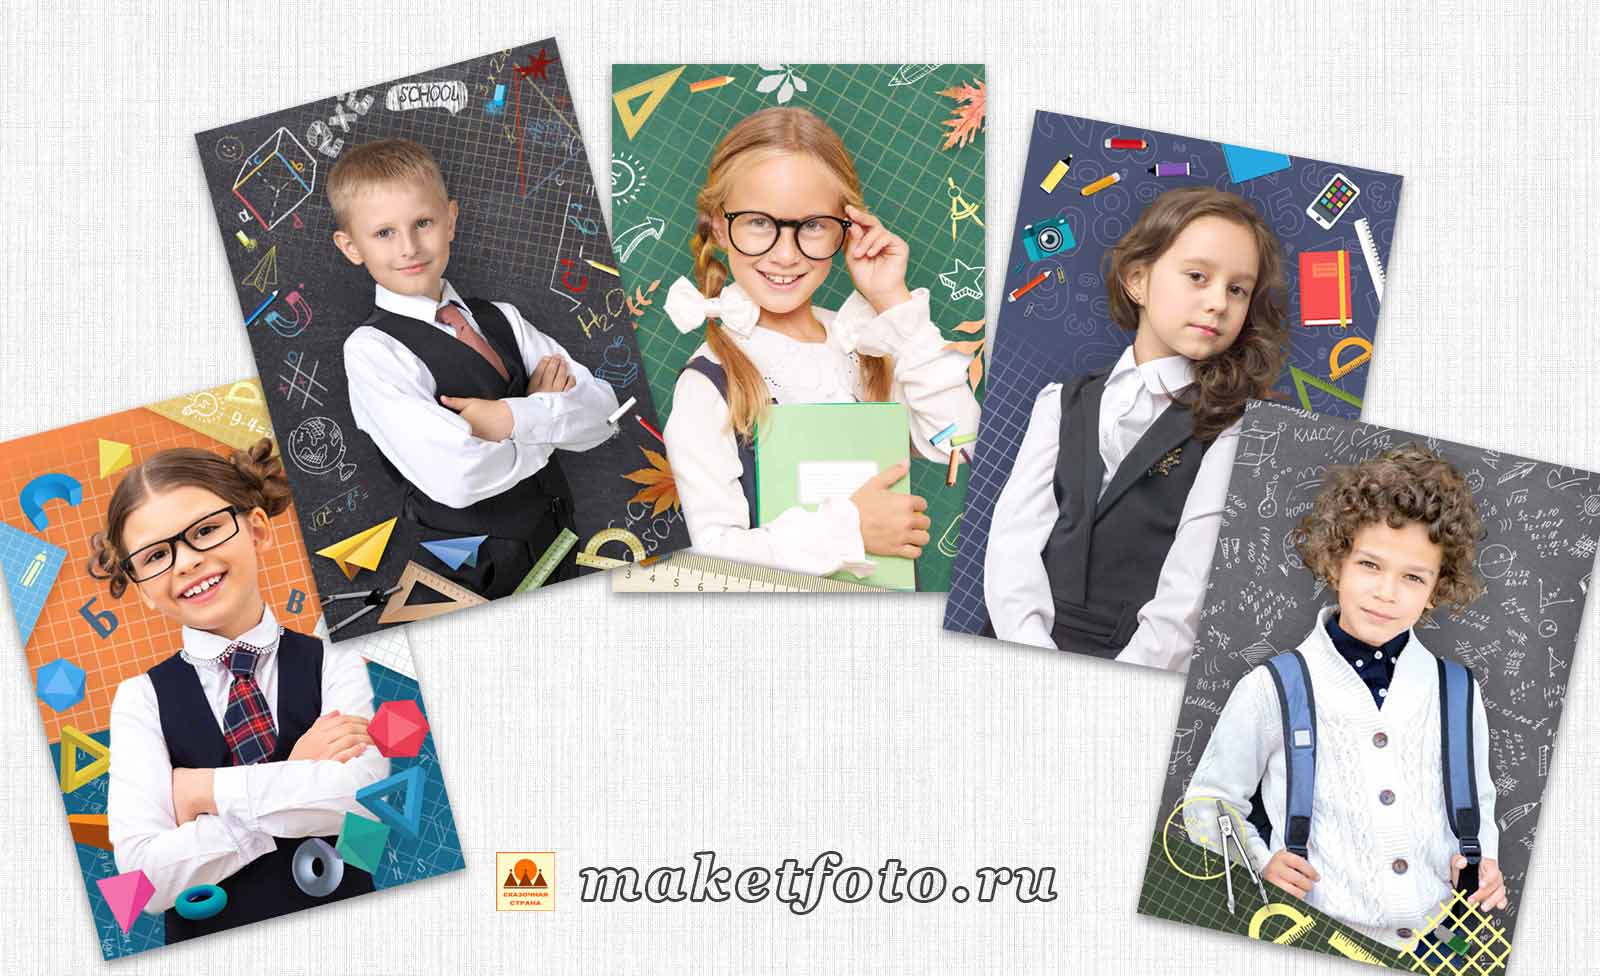 Печать фотоколлажей на День рождения, на Юбилей онлайн по цене от 1,21р. за 30х40